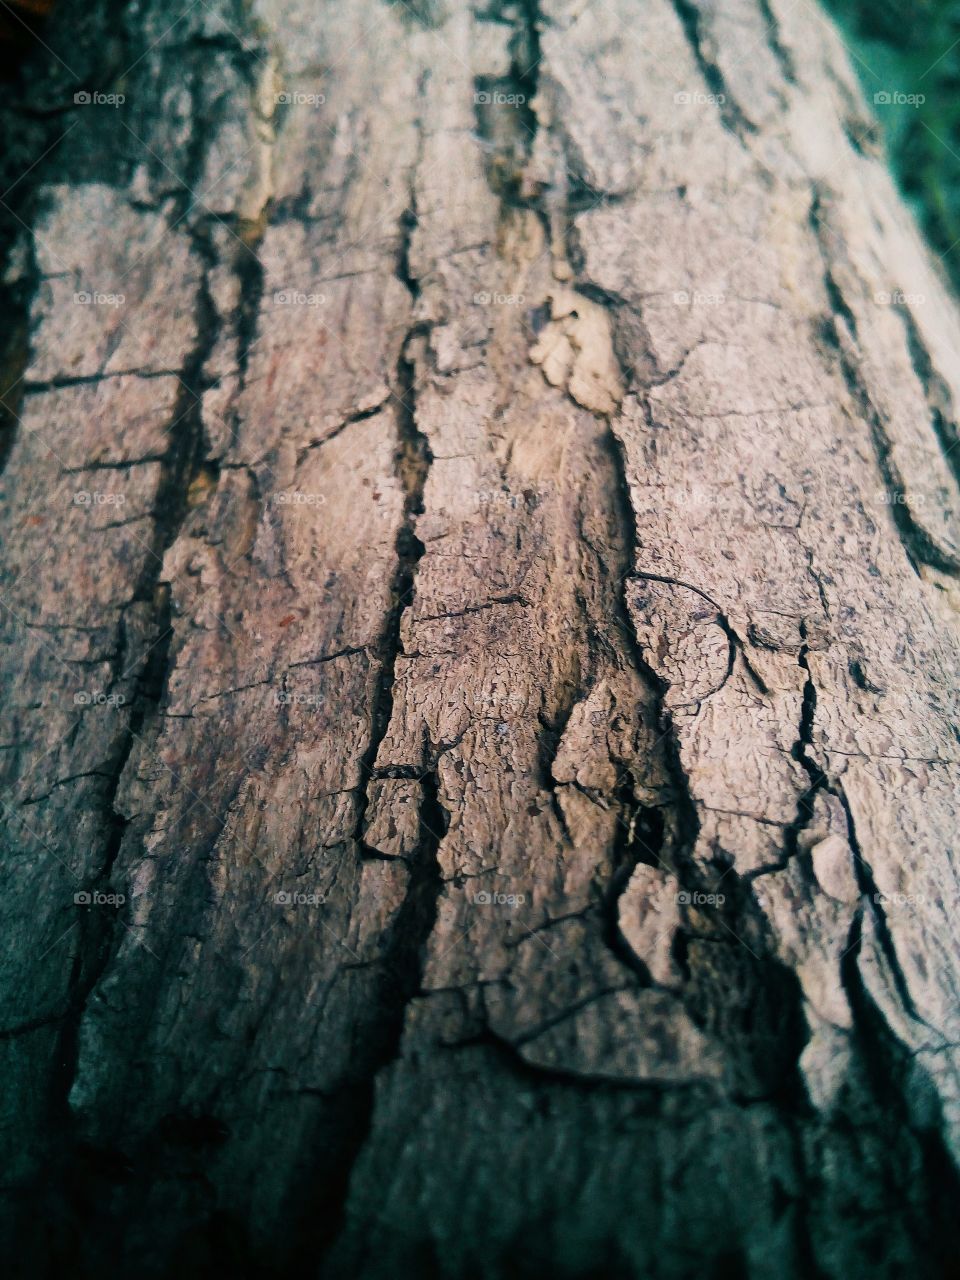 Micro Look At Greyish Bark from an Old tree.